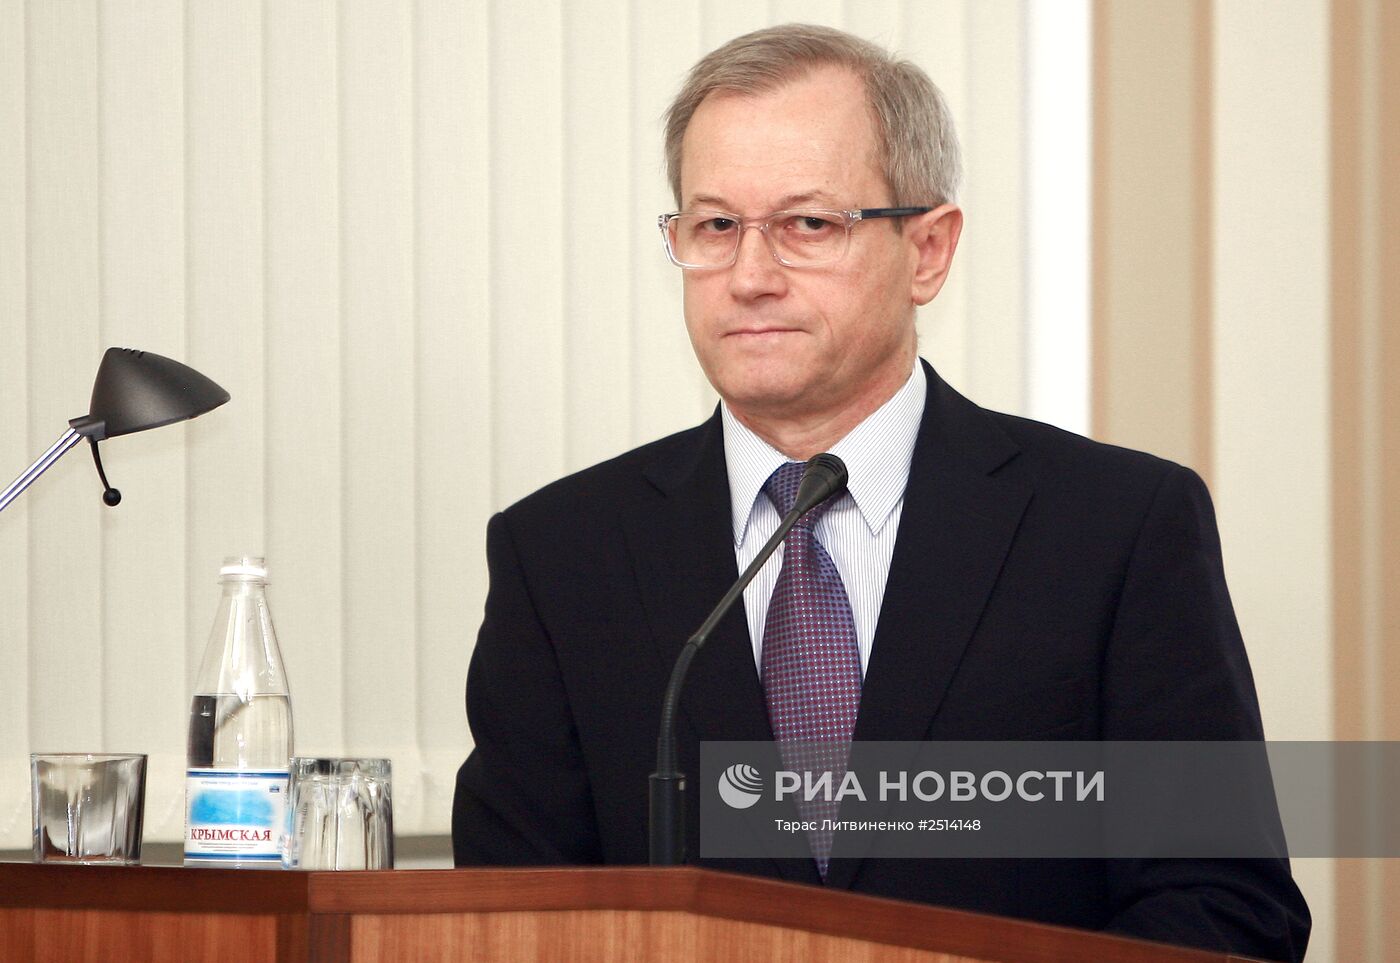 Заседание совета министров Крыма в Симферополе